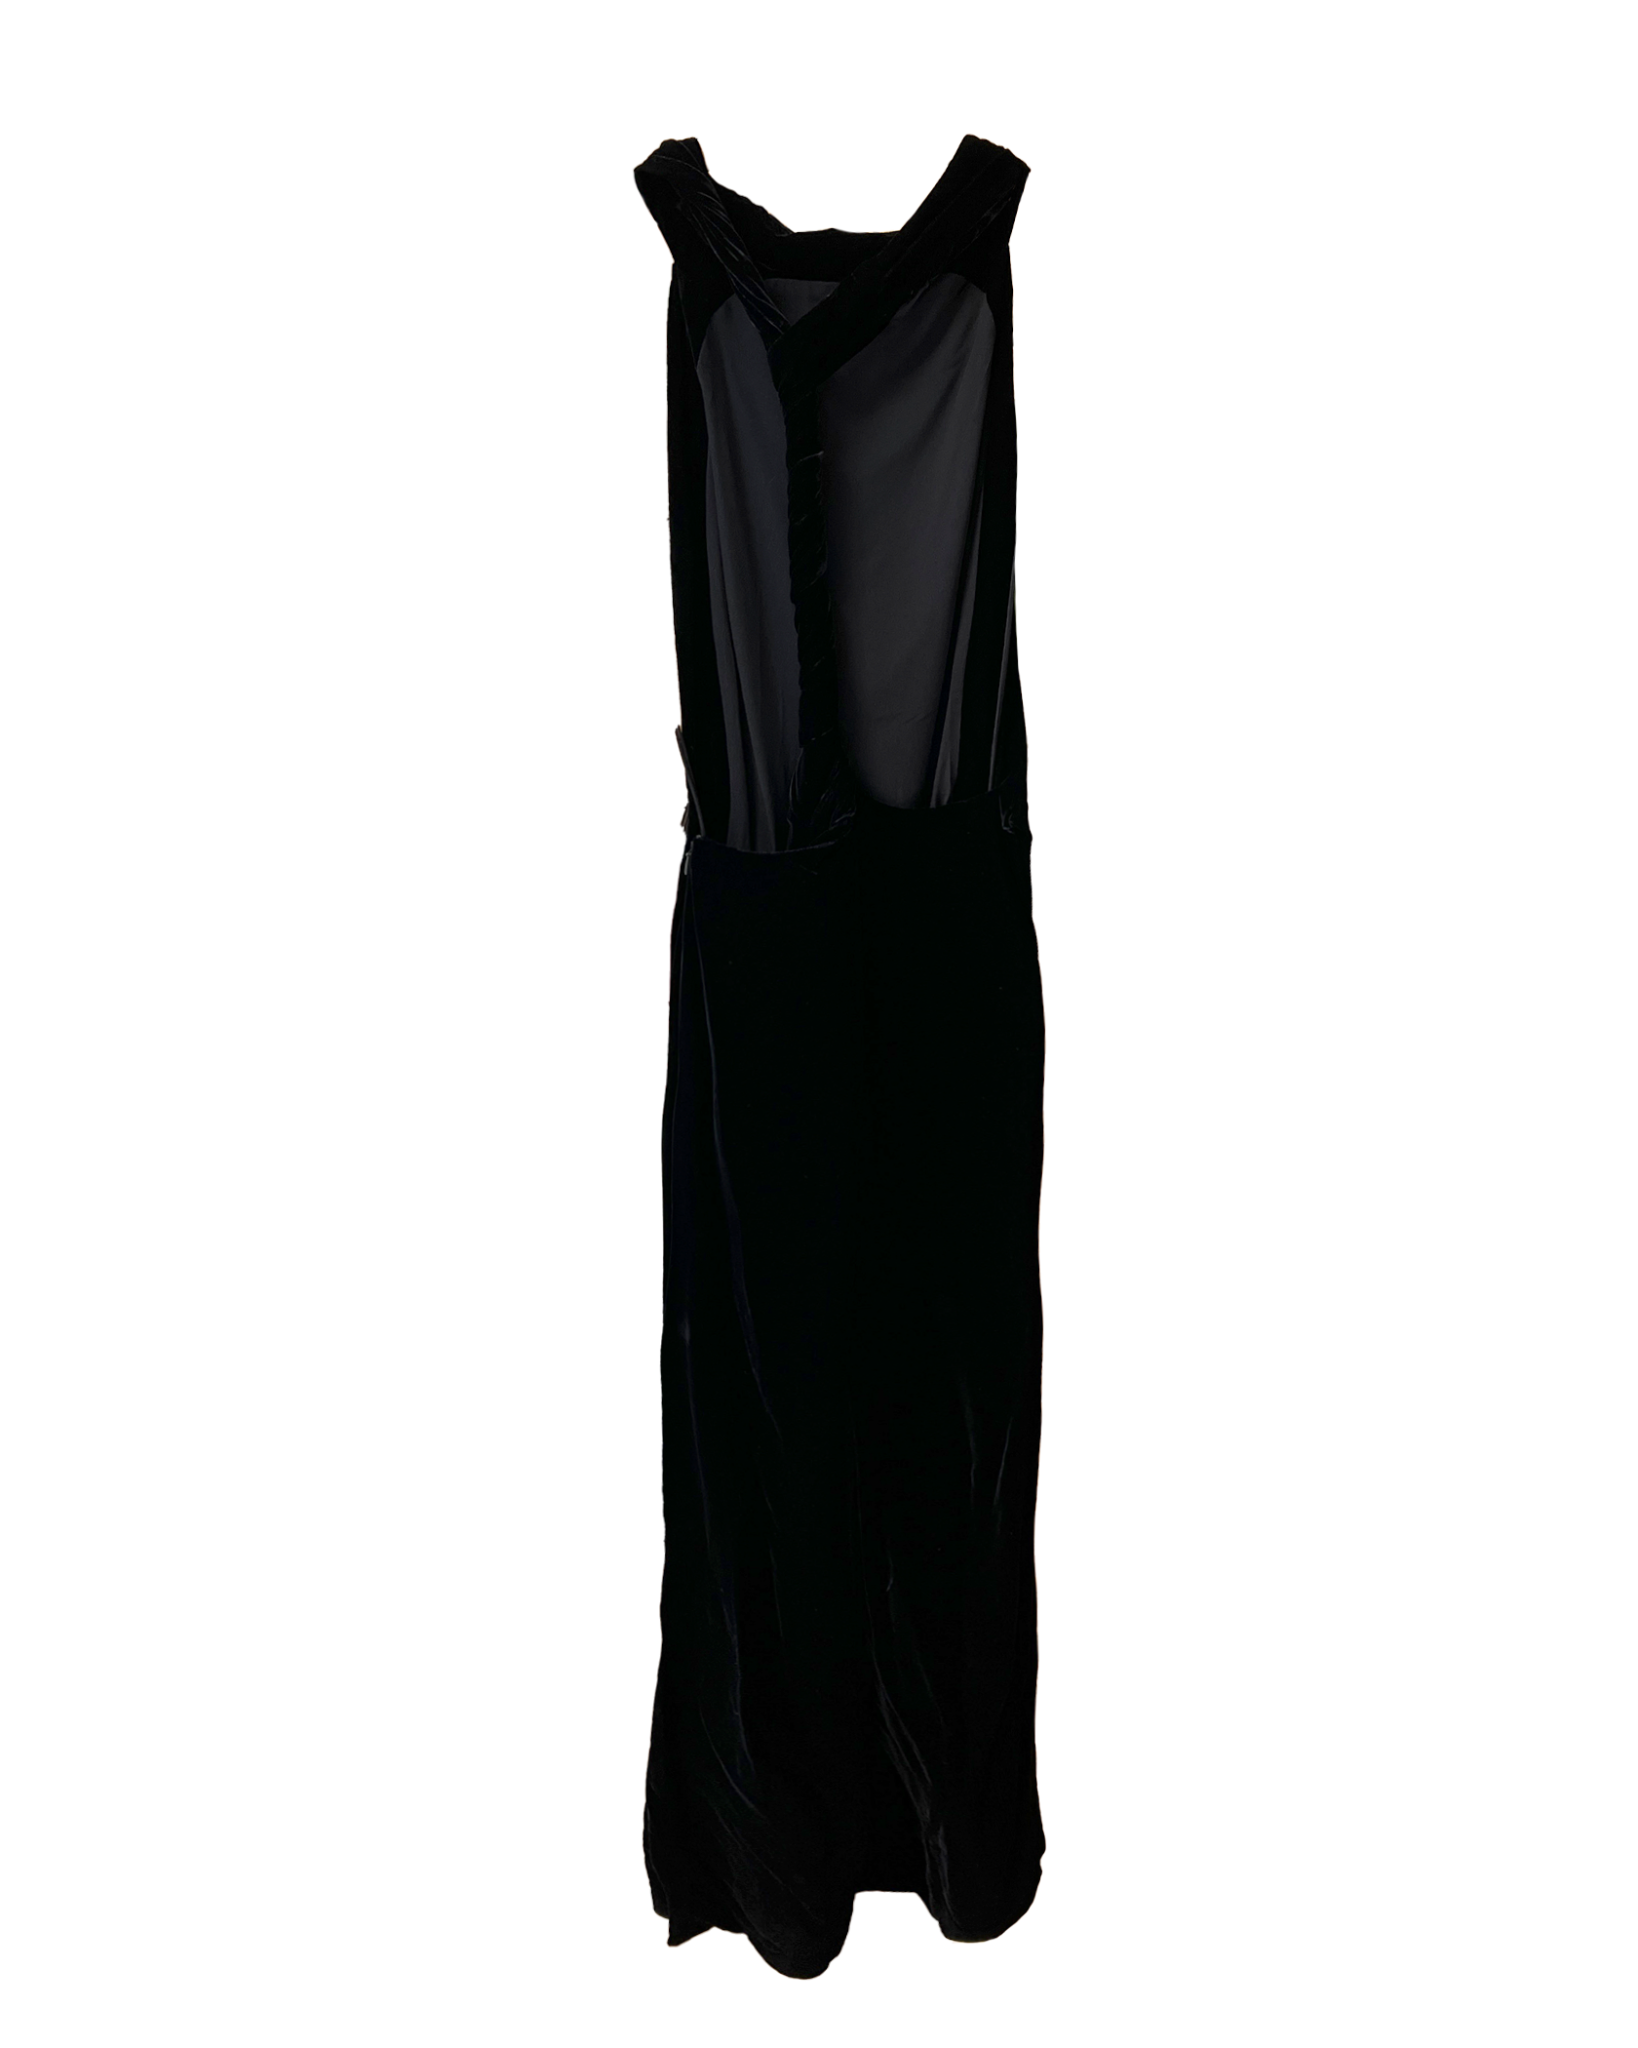 Stella Maxwell in a Summer Velvet Dress